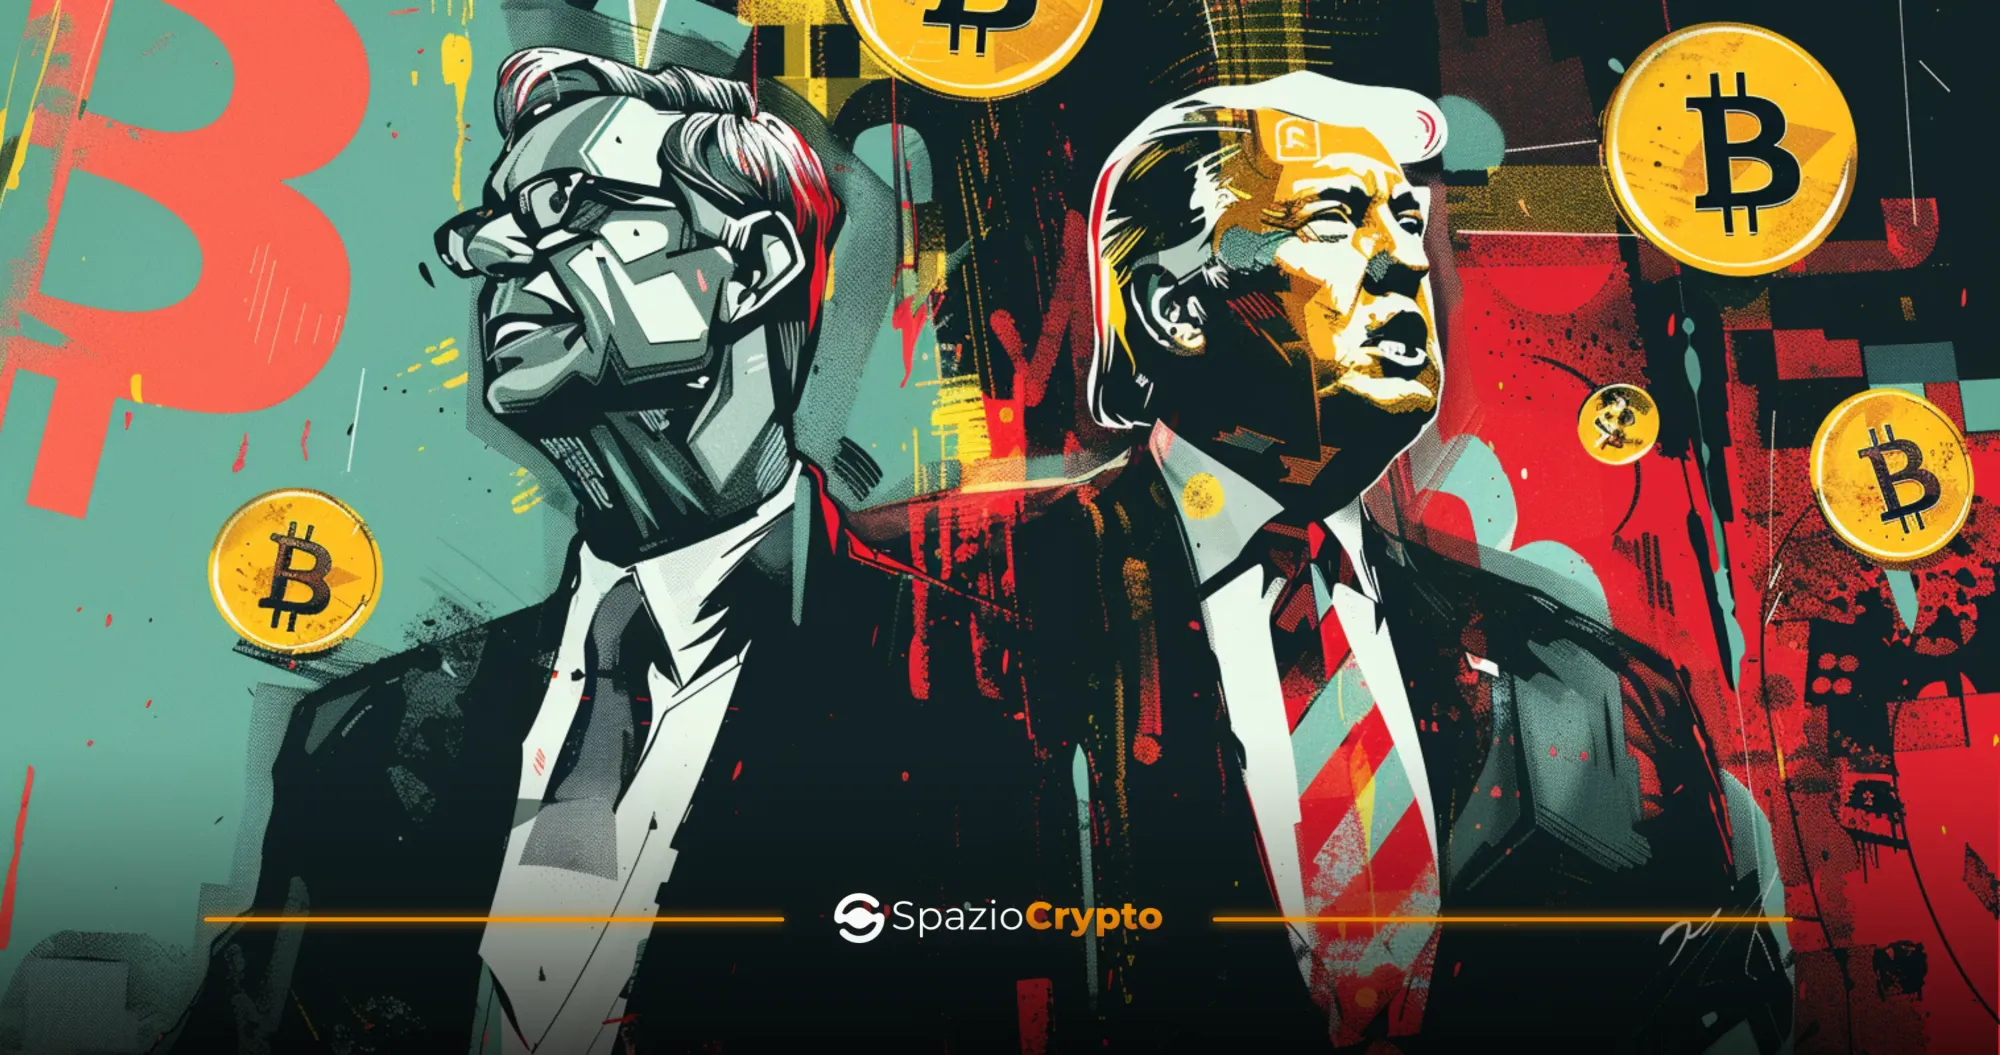 Donald Trump And Cryptocurrencies: Bitcoin As Electoral Battleground - Spaziocrypto